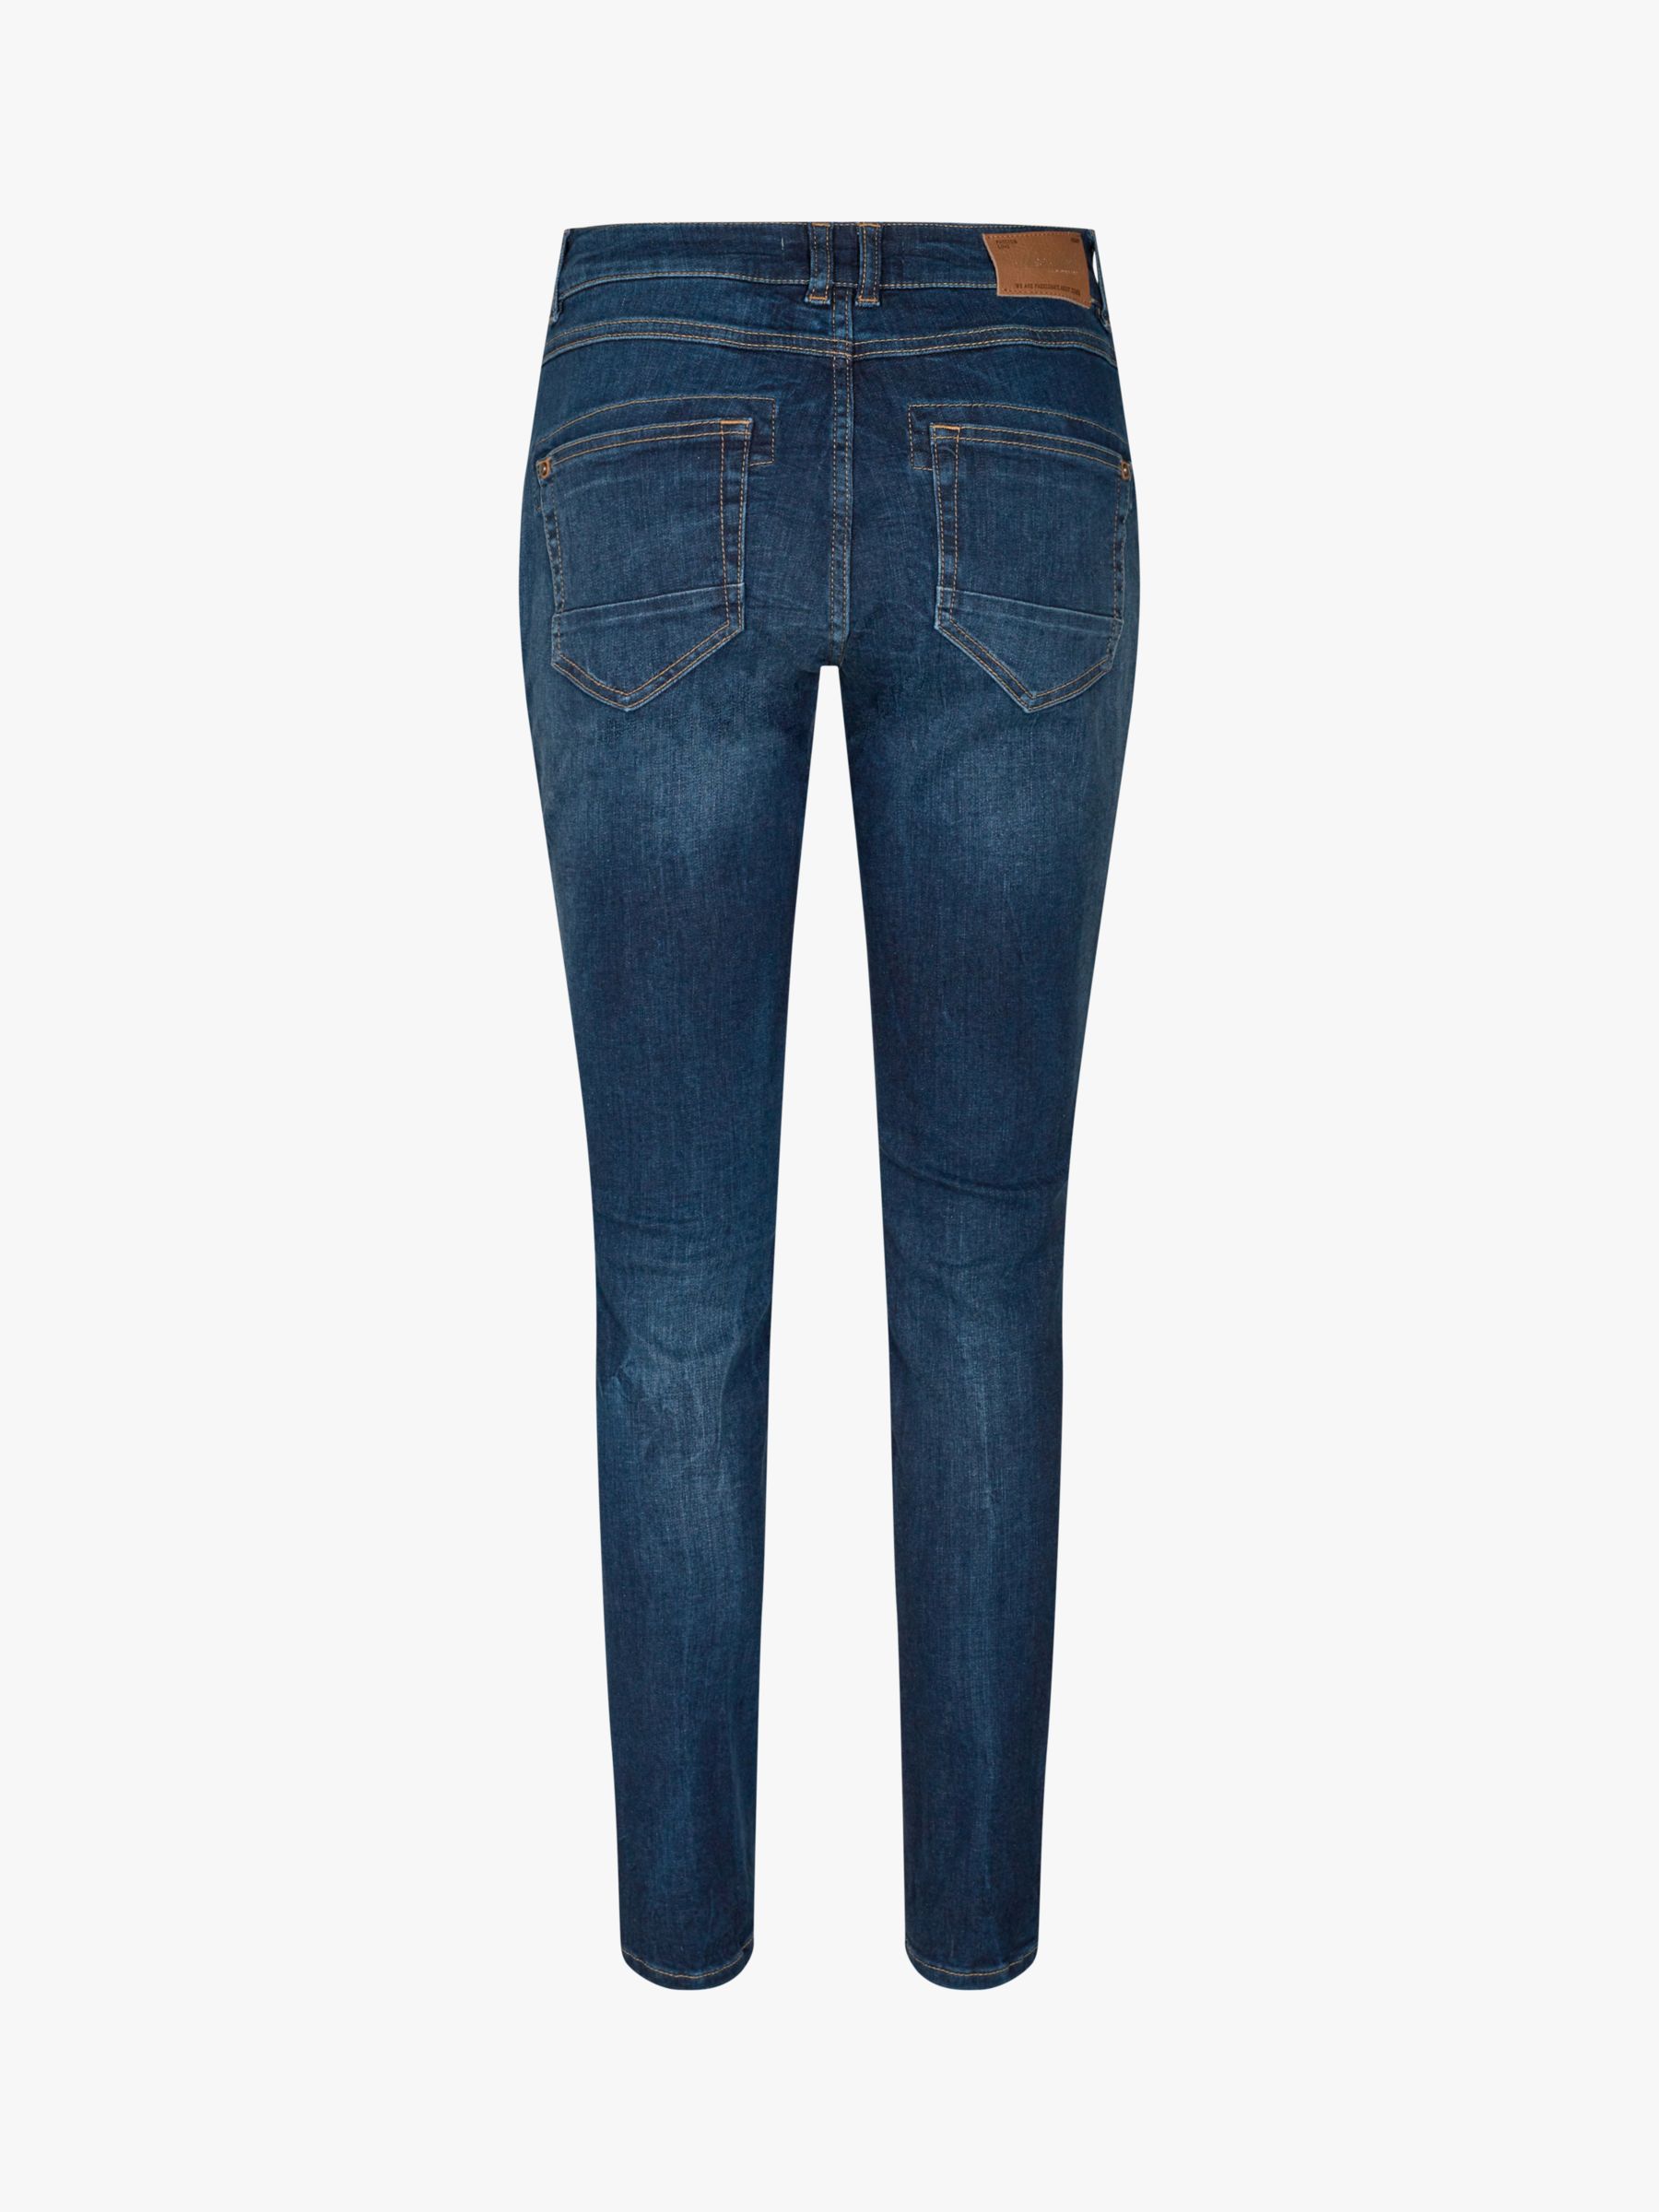 MOS MOSH Naomi Decorative Trim Slim Fit Jeans, Blue, 28R